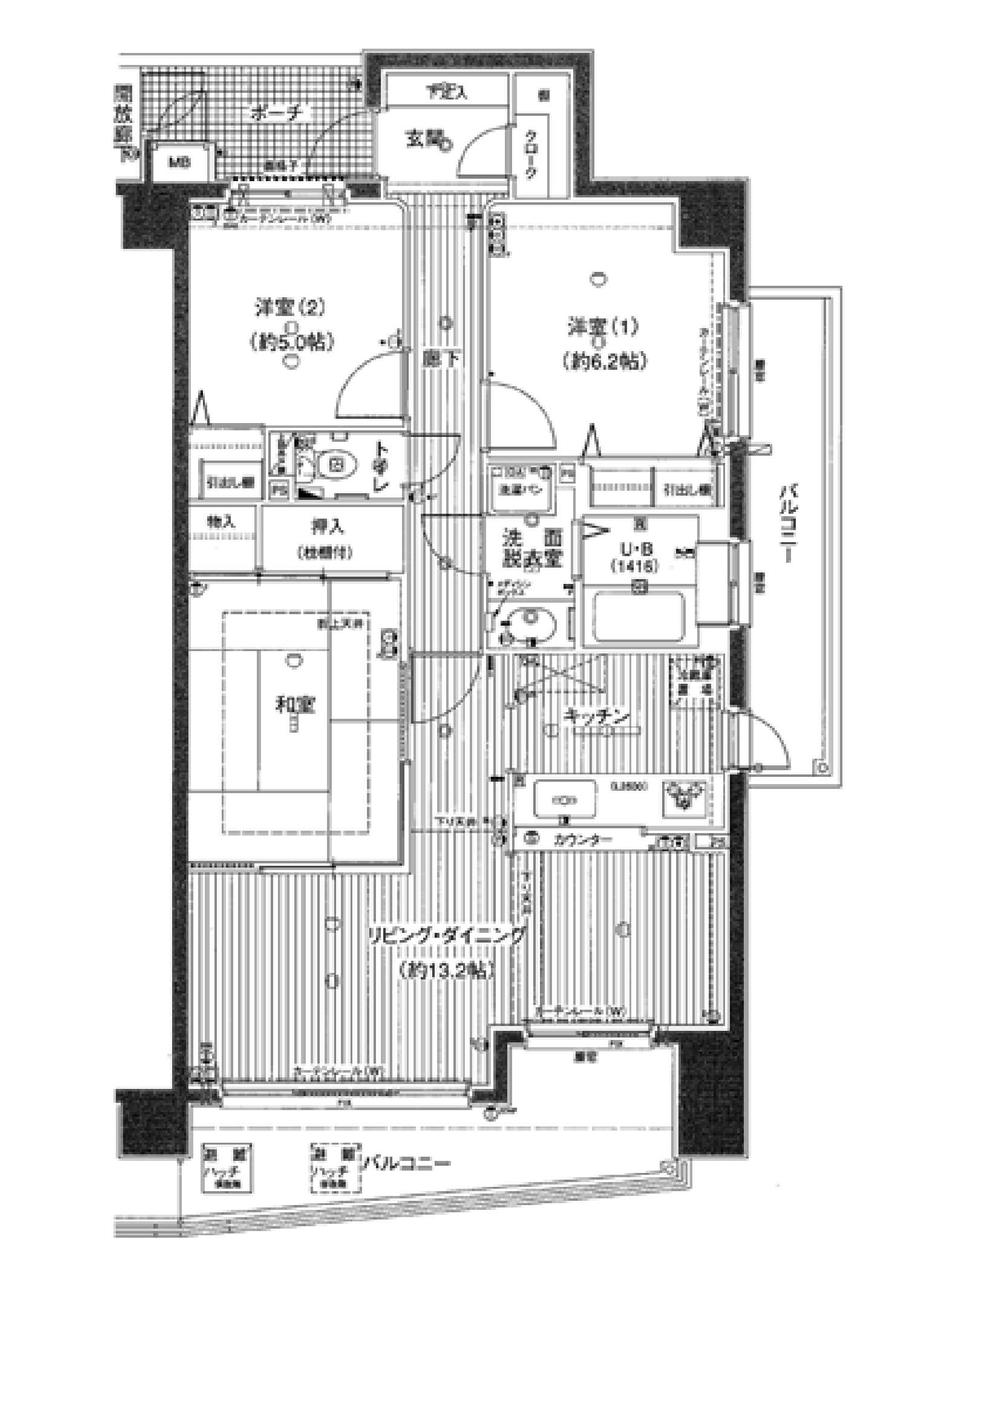 Floor plan. 3LDK, Price 12.5 million yen, Footprint 77.6 sq m , Balcony area 18.71 sq m